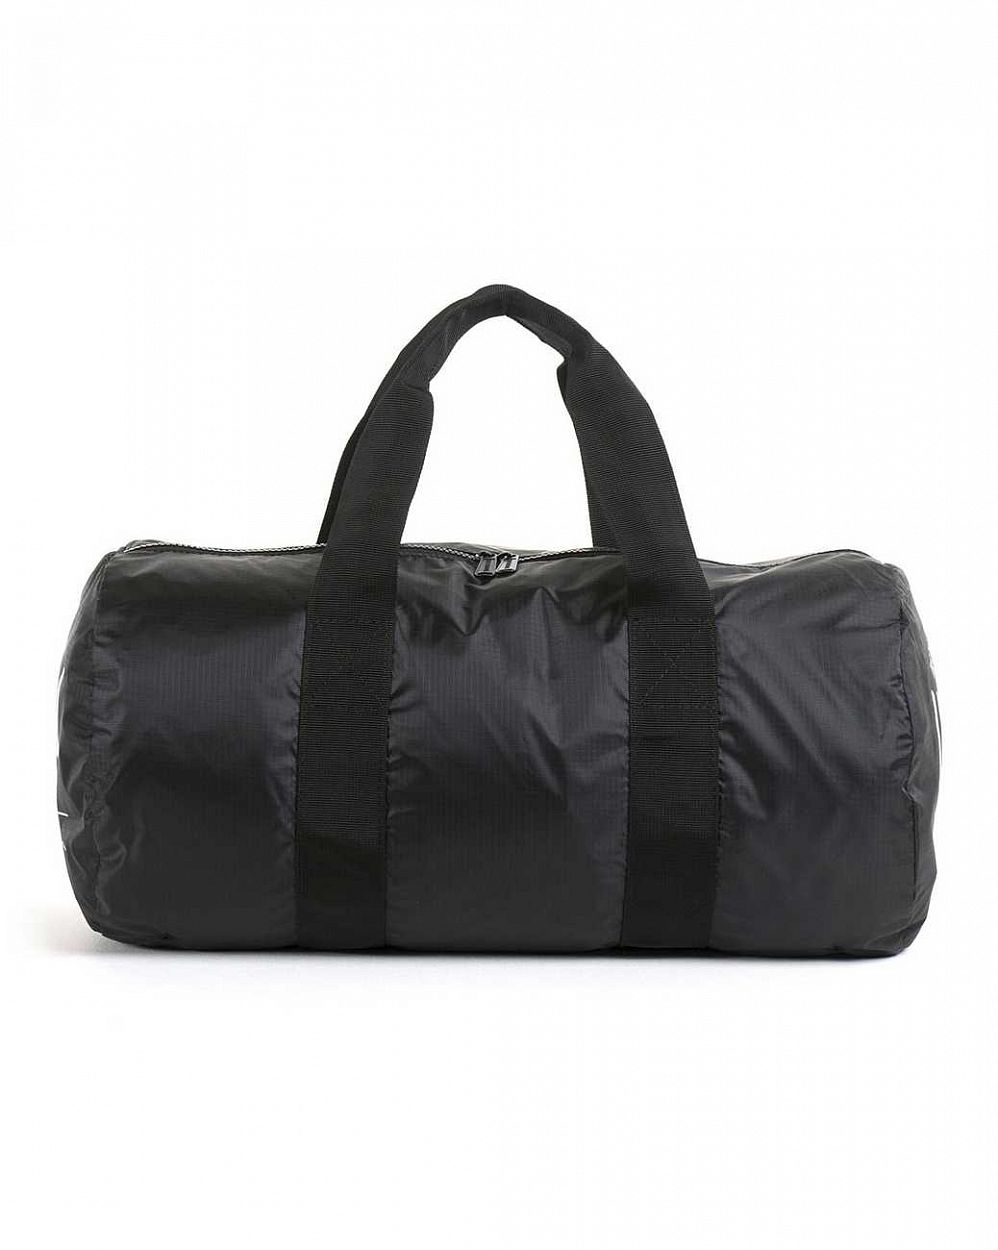 Сумка складная Herschel Packable Duffle Bag Black отзывы